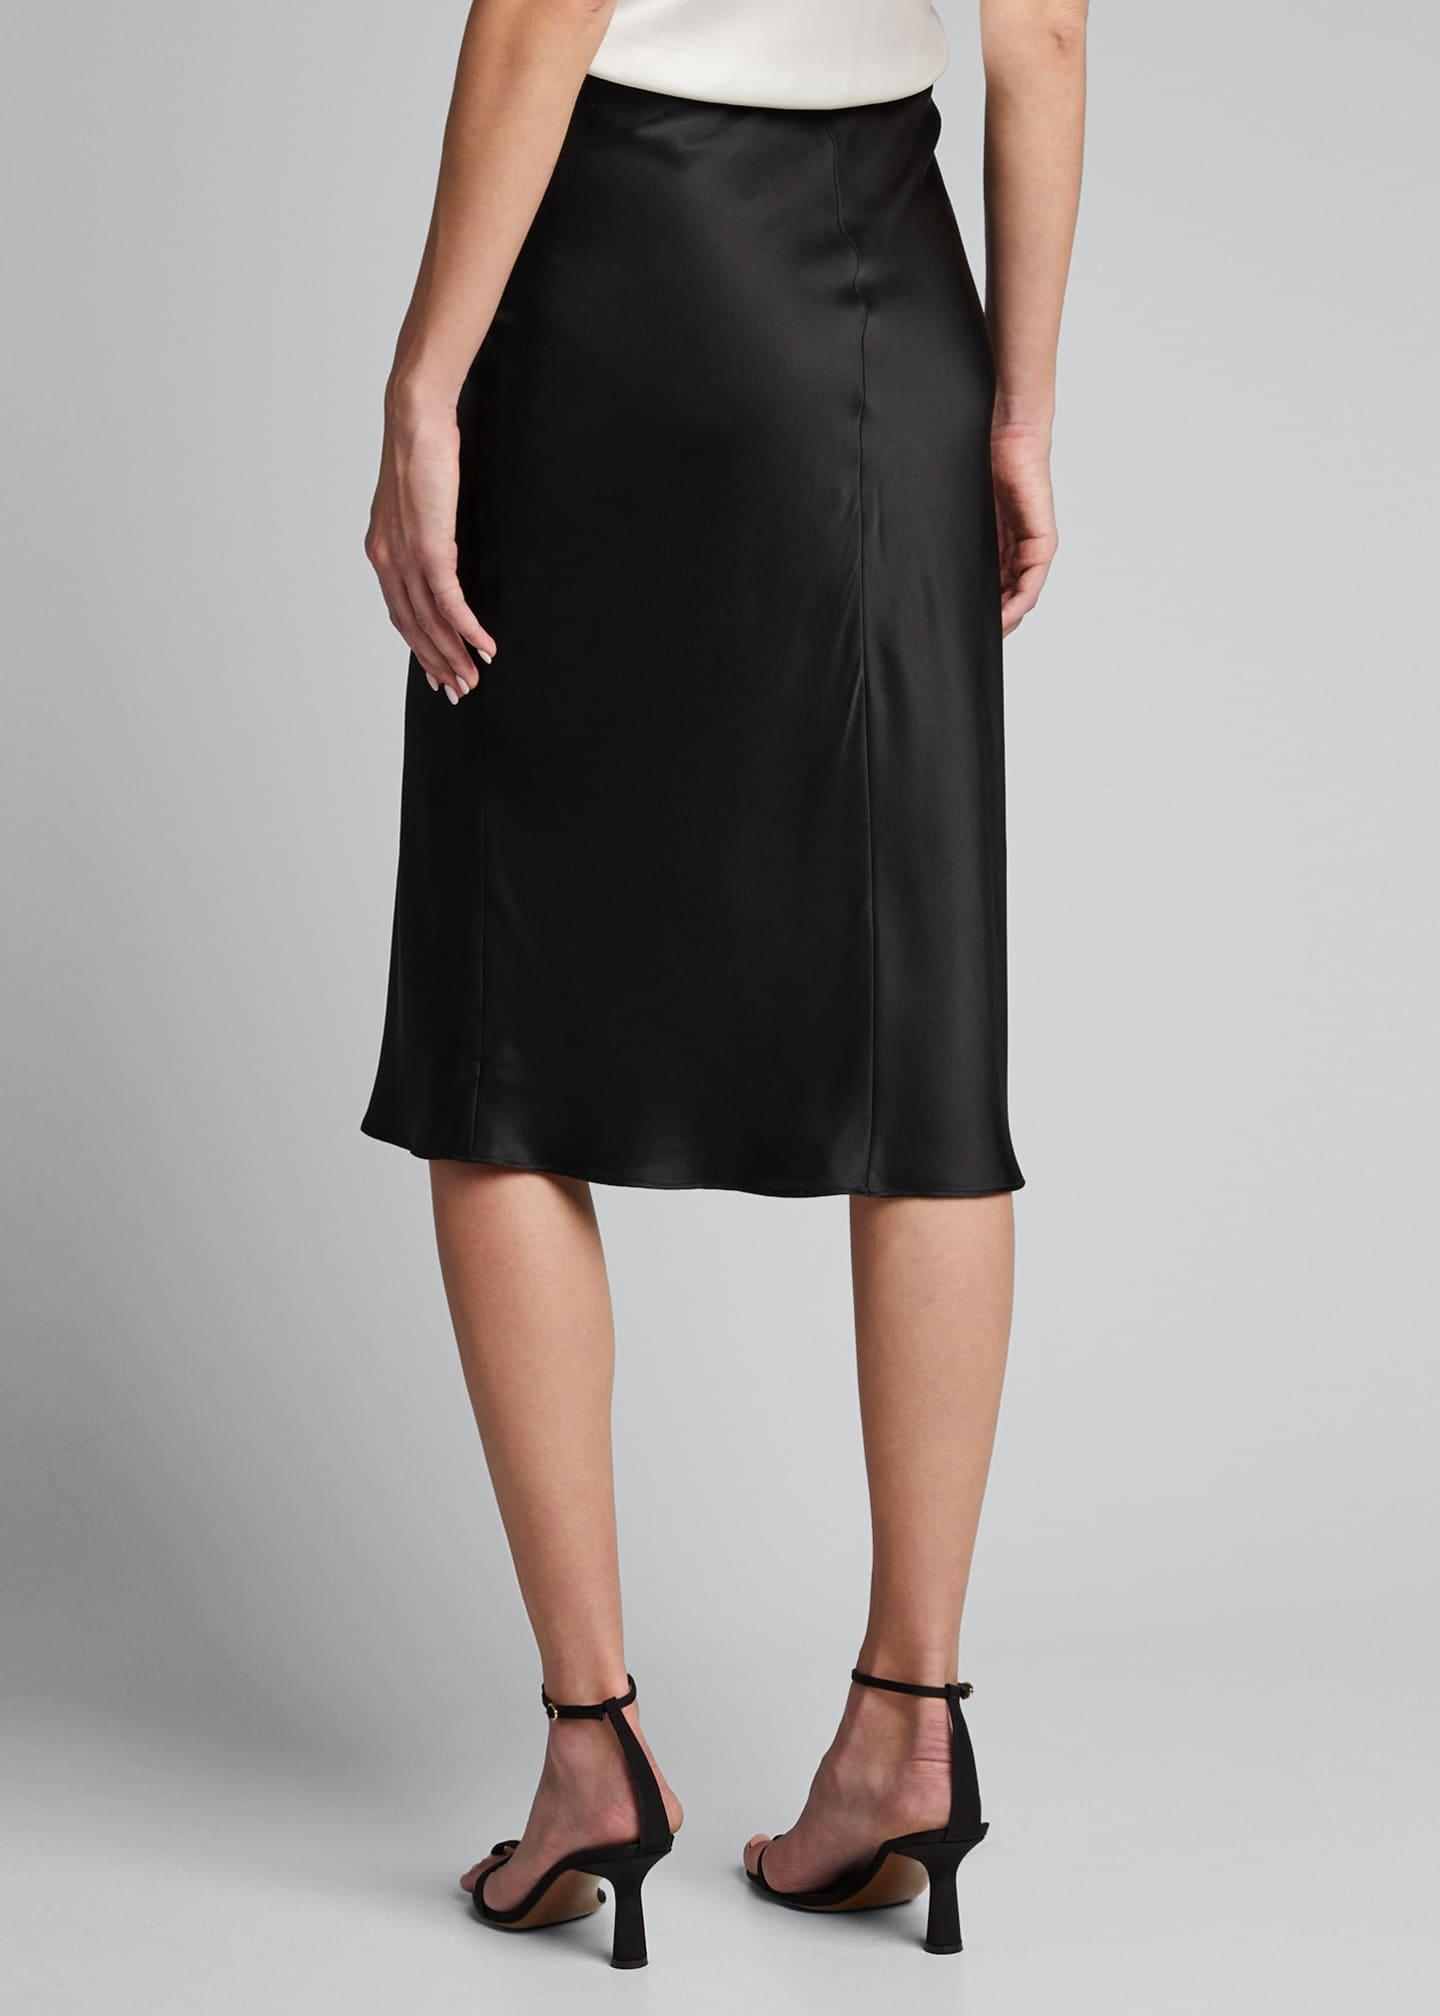 L'Agence Silk Perin Knee-length Bias Skirt in Black - Lyst